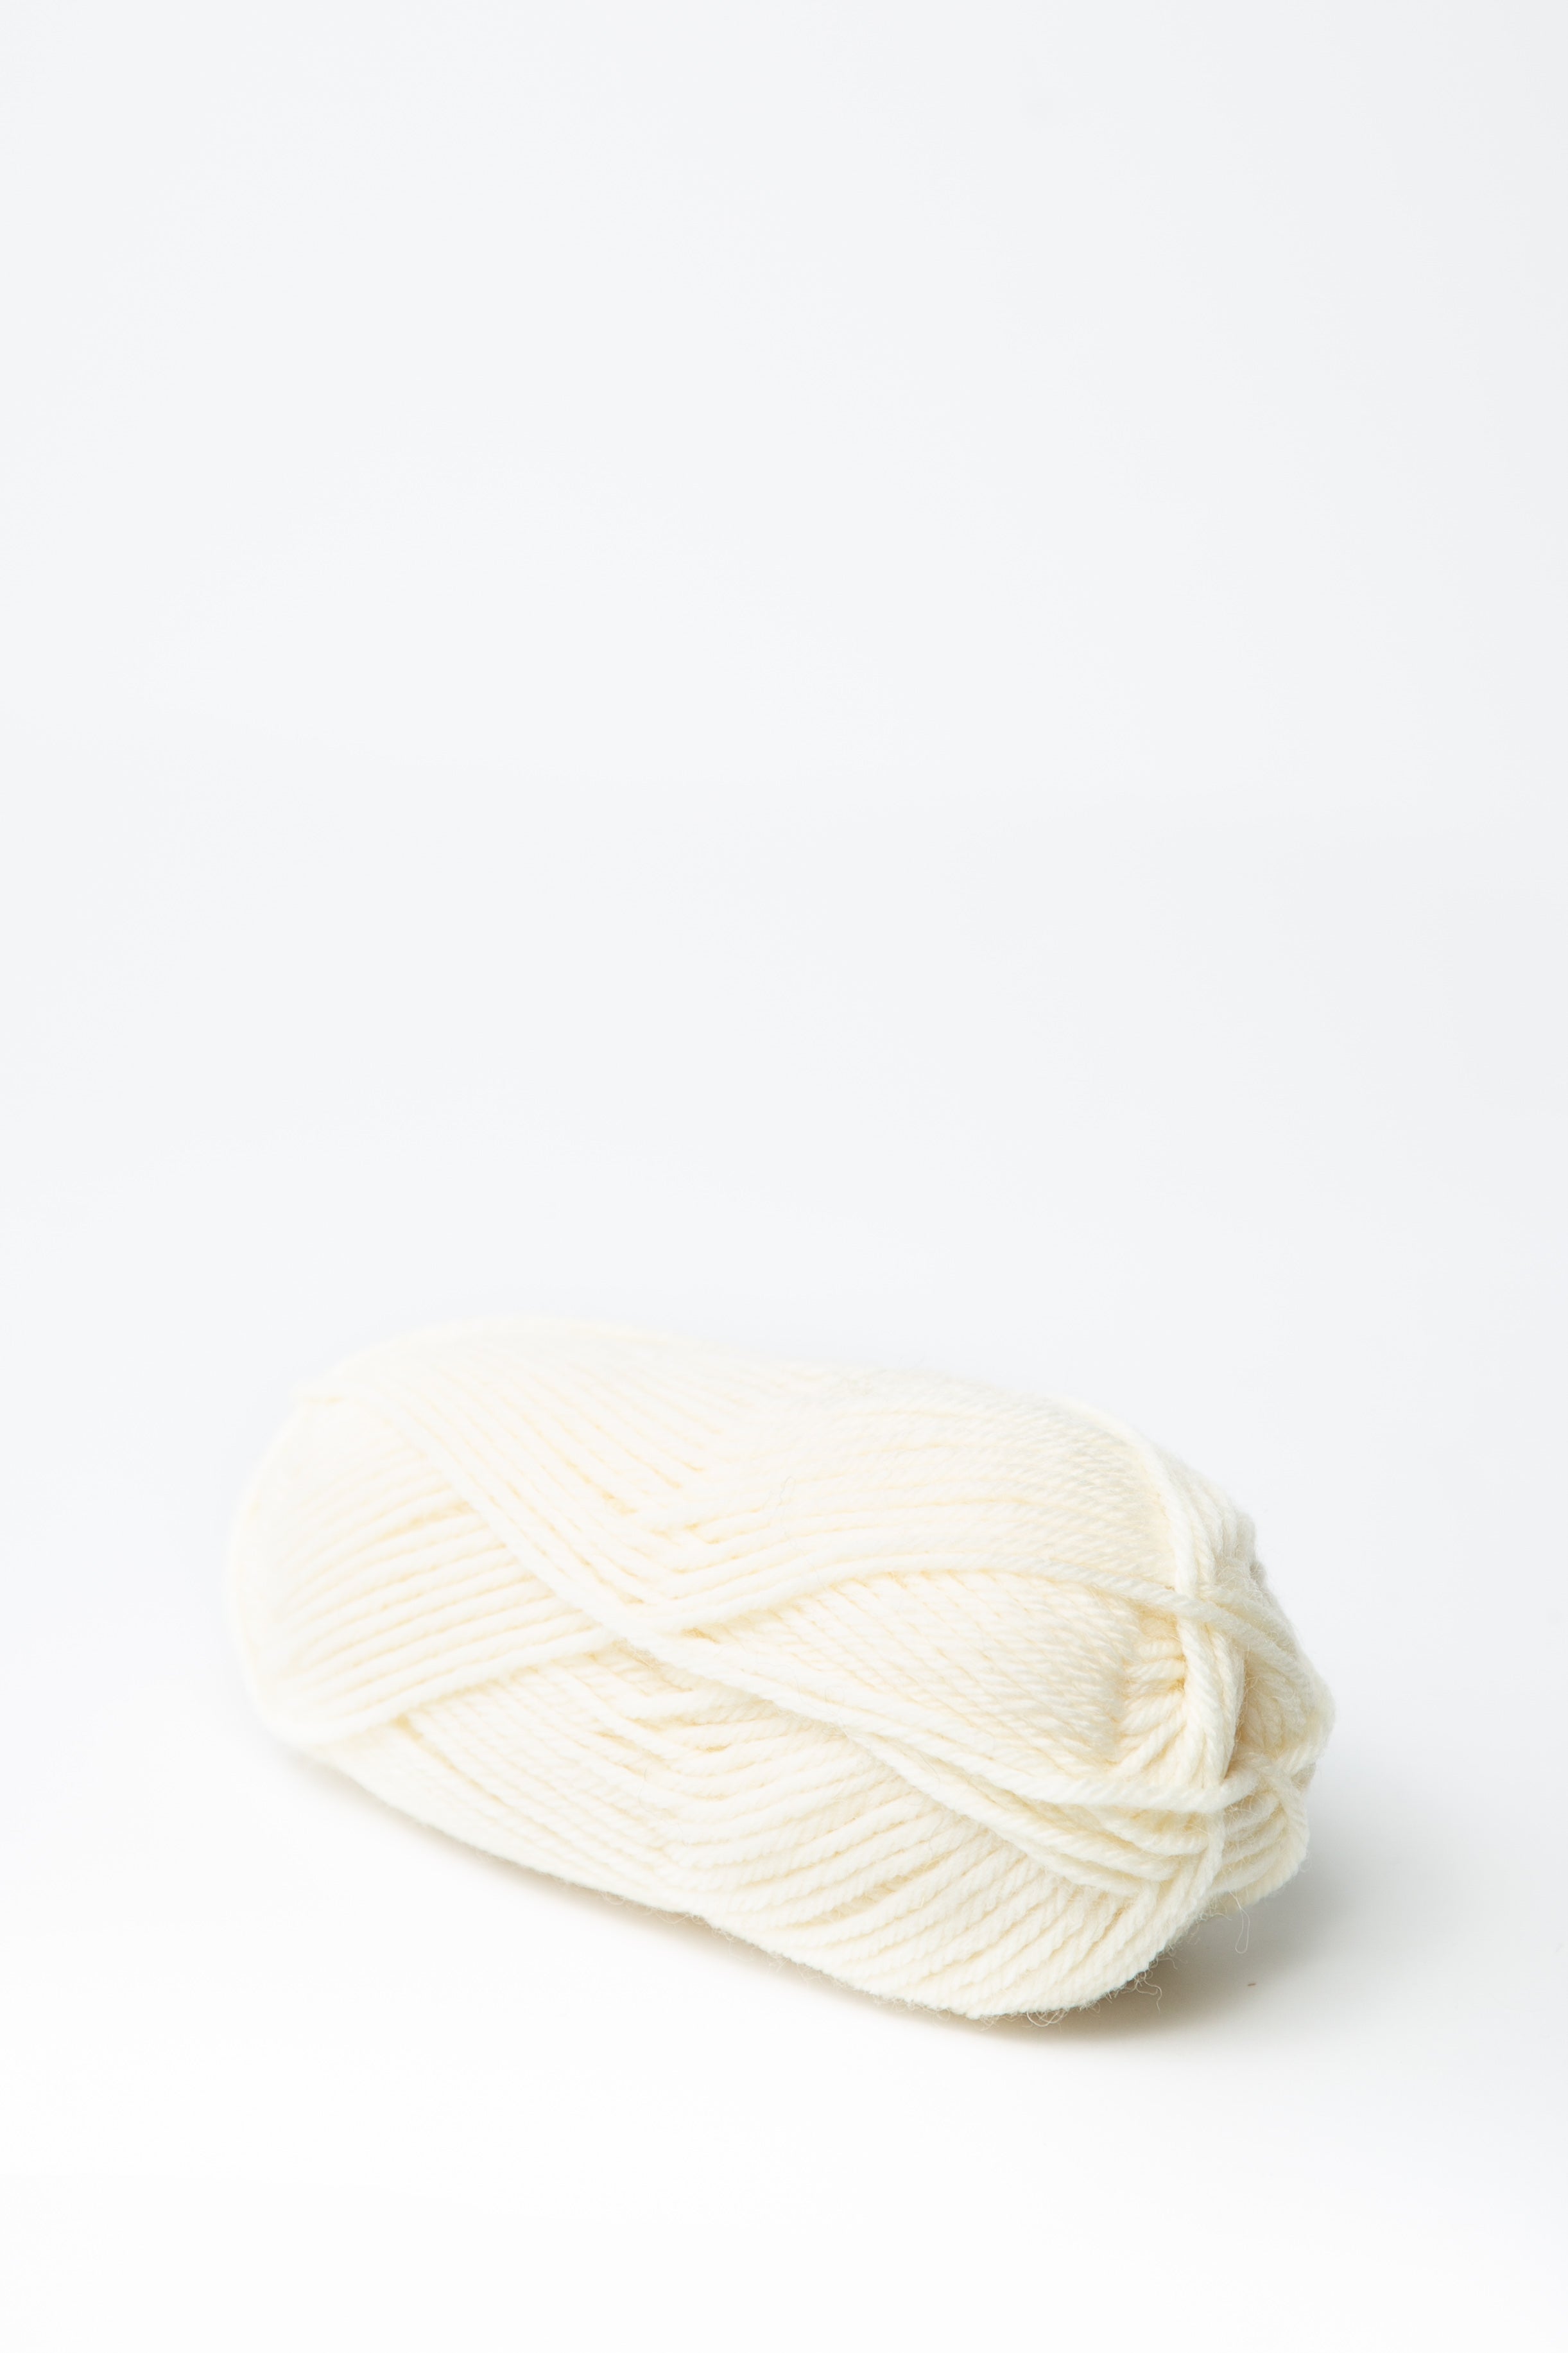 100% Wool Yarn for Knitting and Crocheting, 3 or Light, Worsted, DK Weight,  Drops Karisma, 1.8 oz 109 Yards per Ball (79 Lemon) - Yahoo Shopping